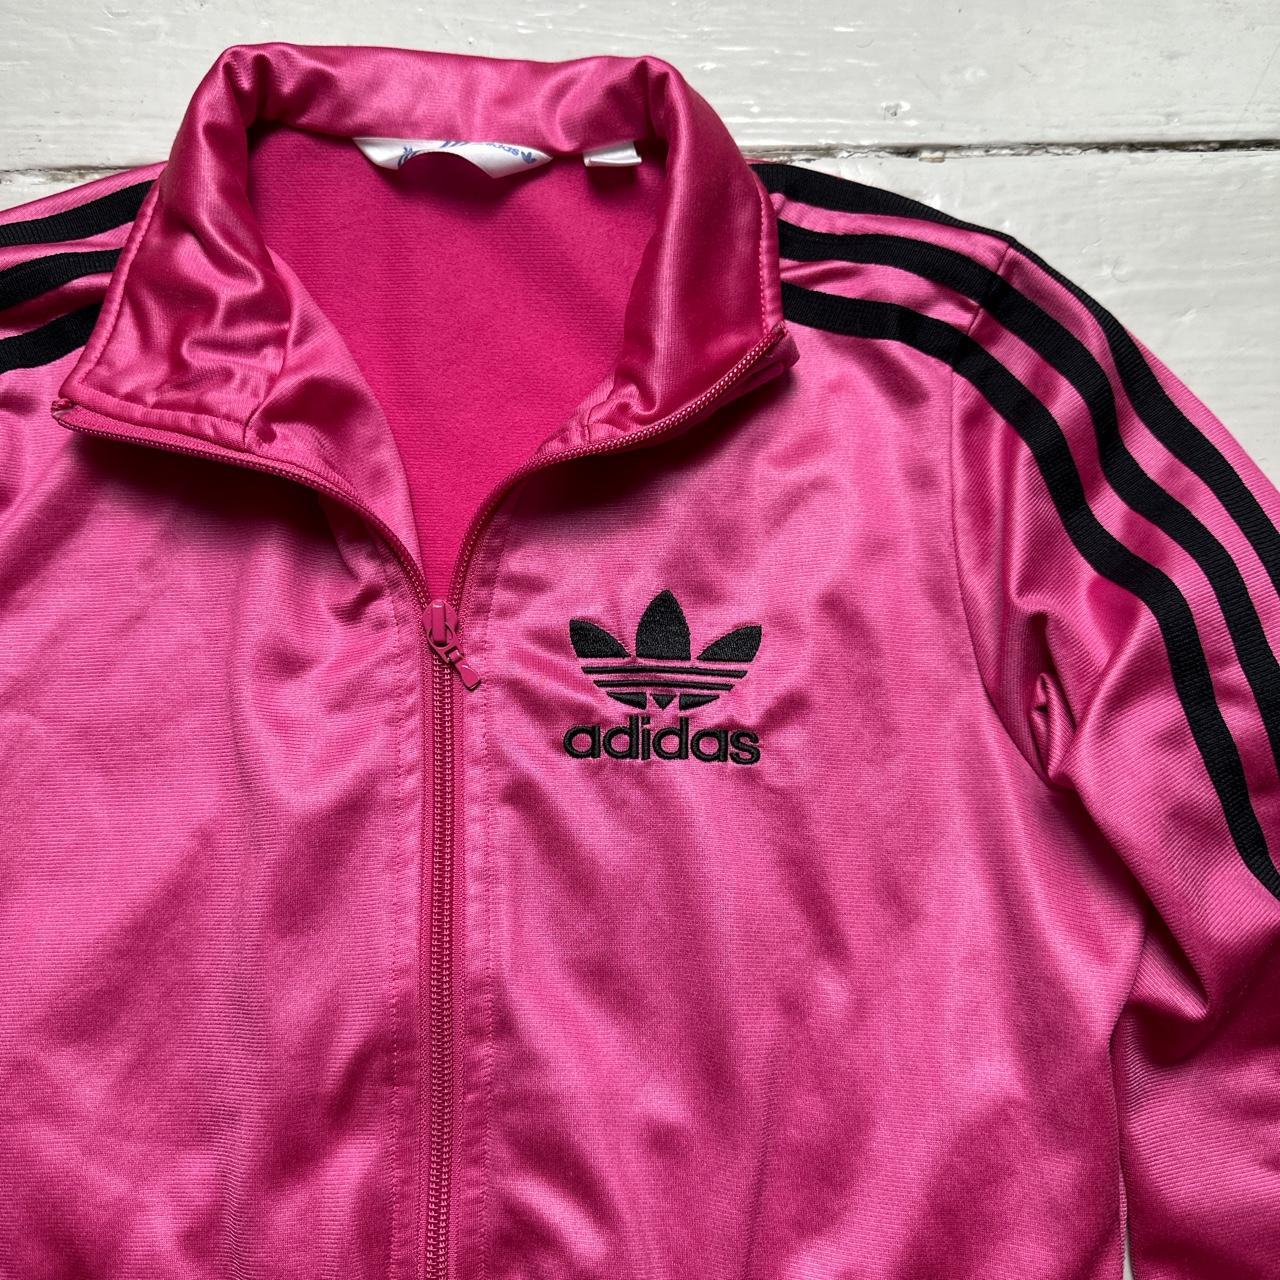 Adidas Originals Vintage Chile 62 Tracksuit Jacket Pink and Black